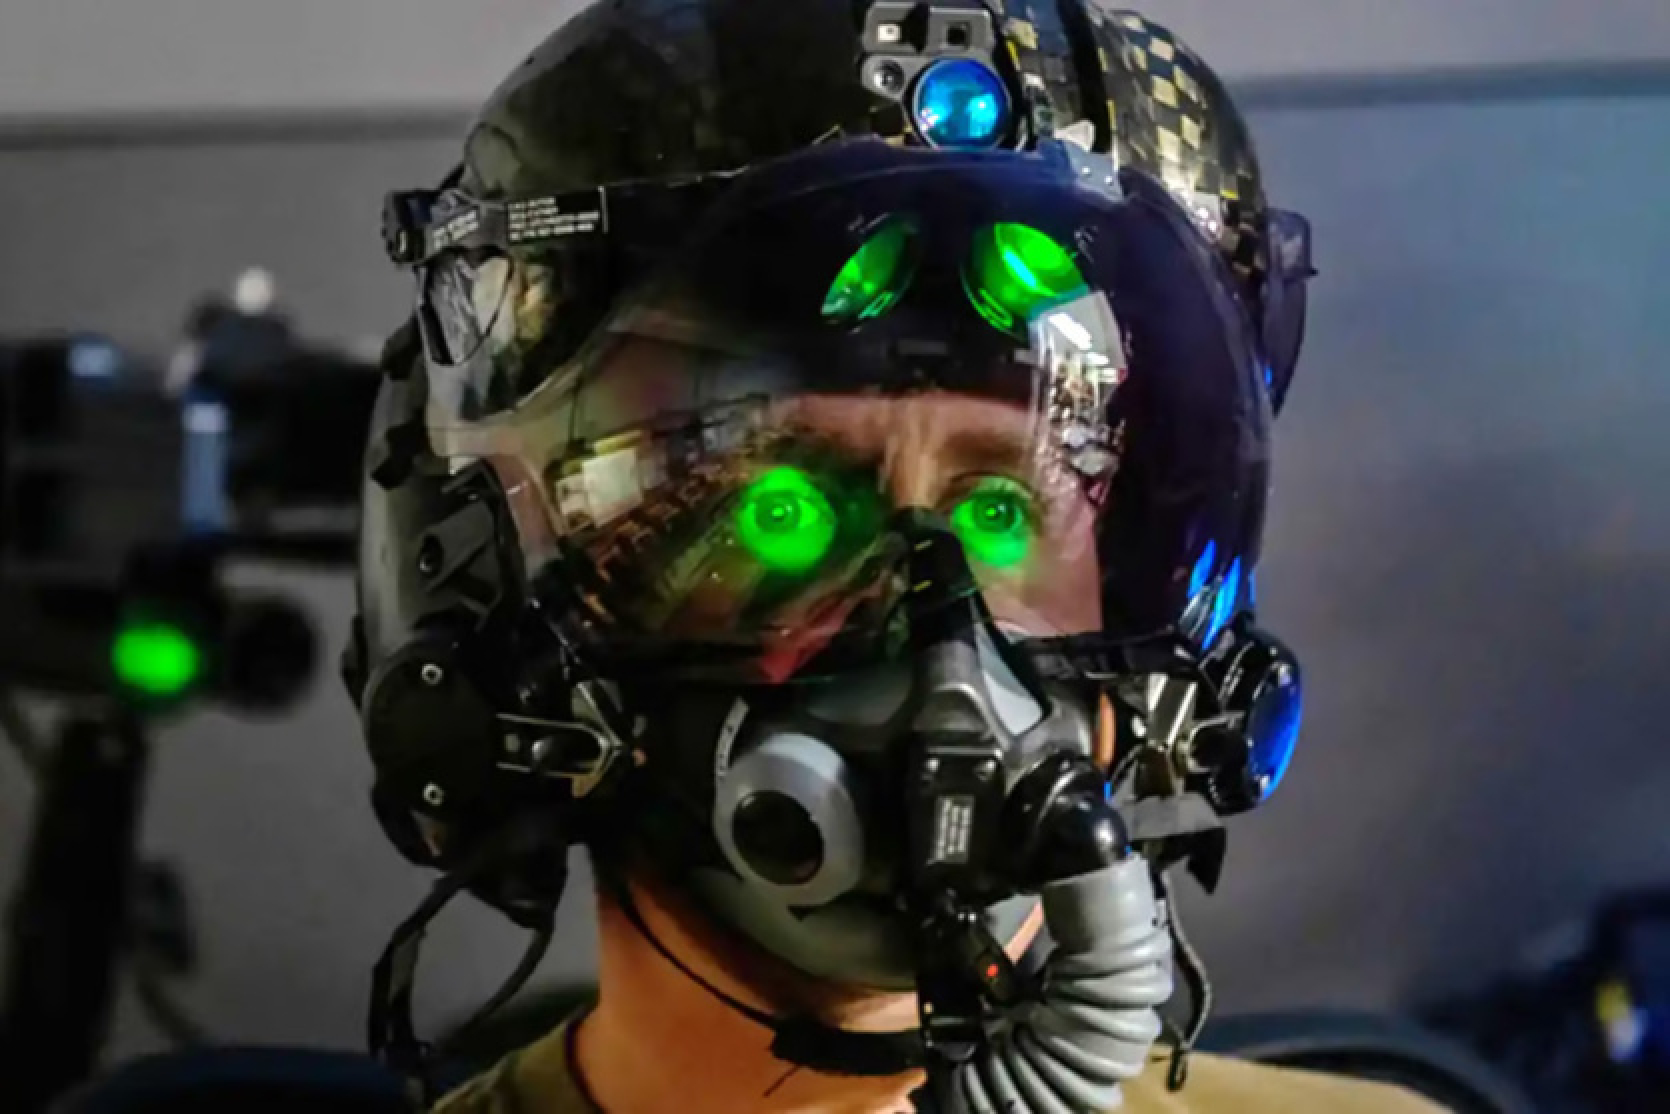 Collins Aerospace's $400,000 HMDS Gen 3 helmet makes the F-35 fighter jet "transparent" to the pilot